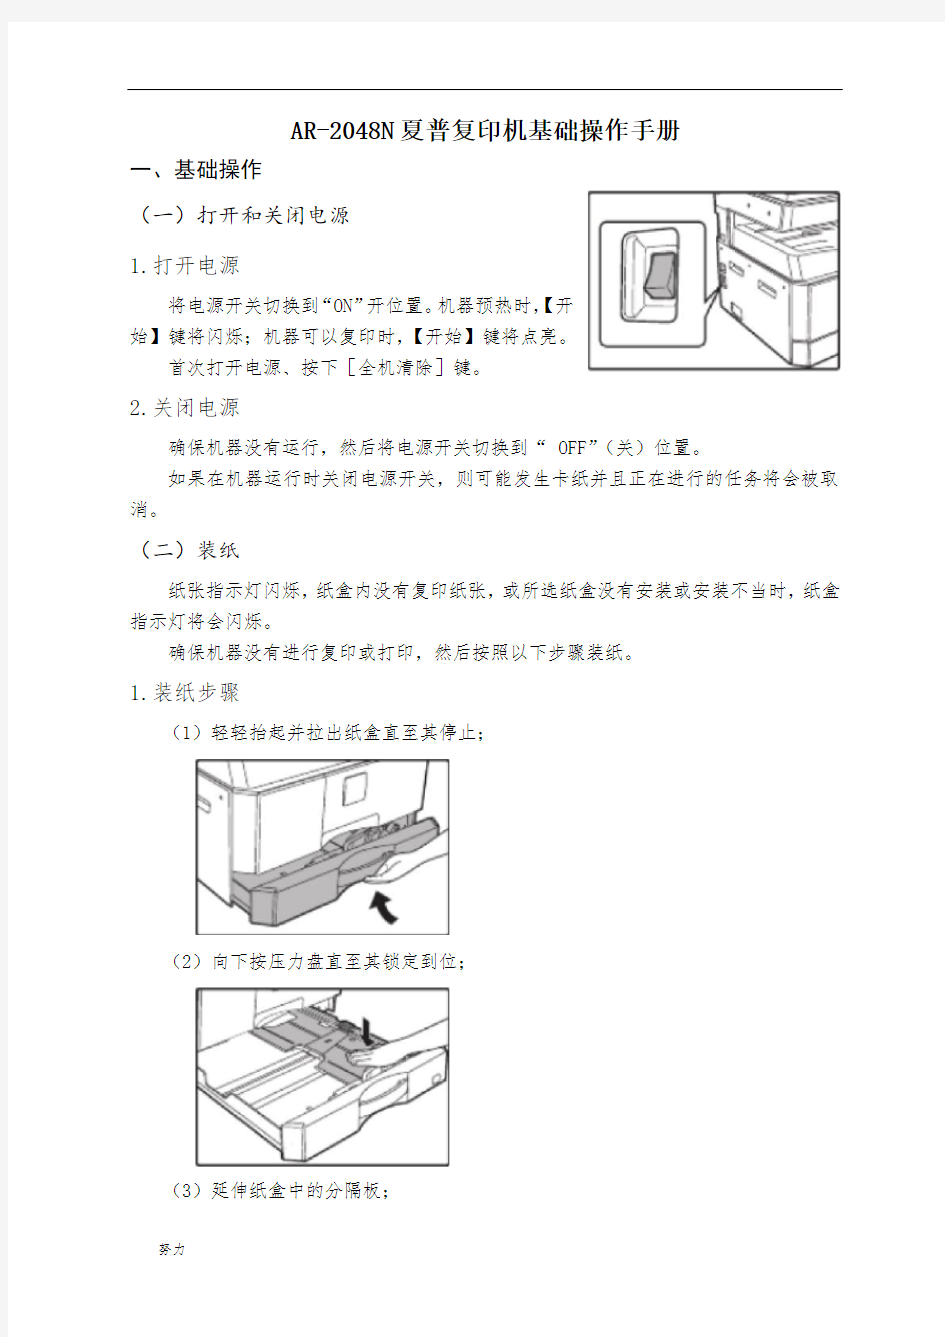 AR-2048N夏普复印机基础操作手册.-精心整理